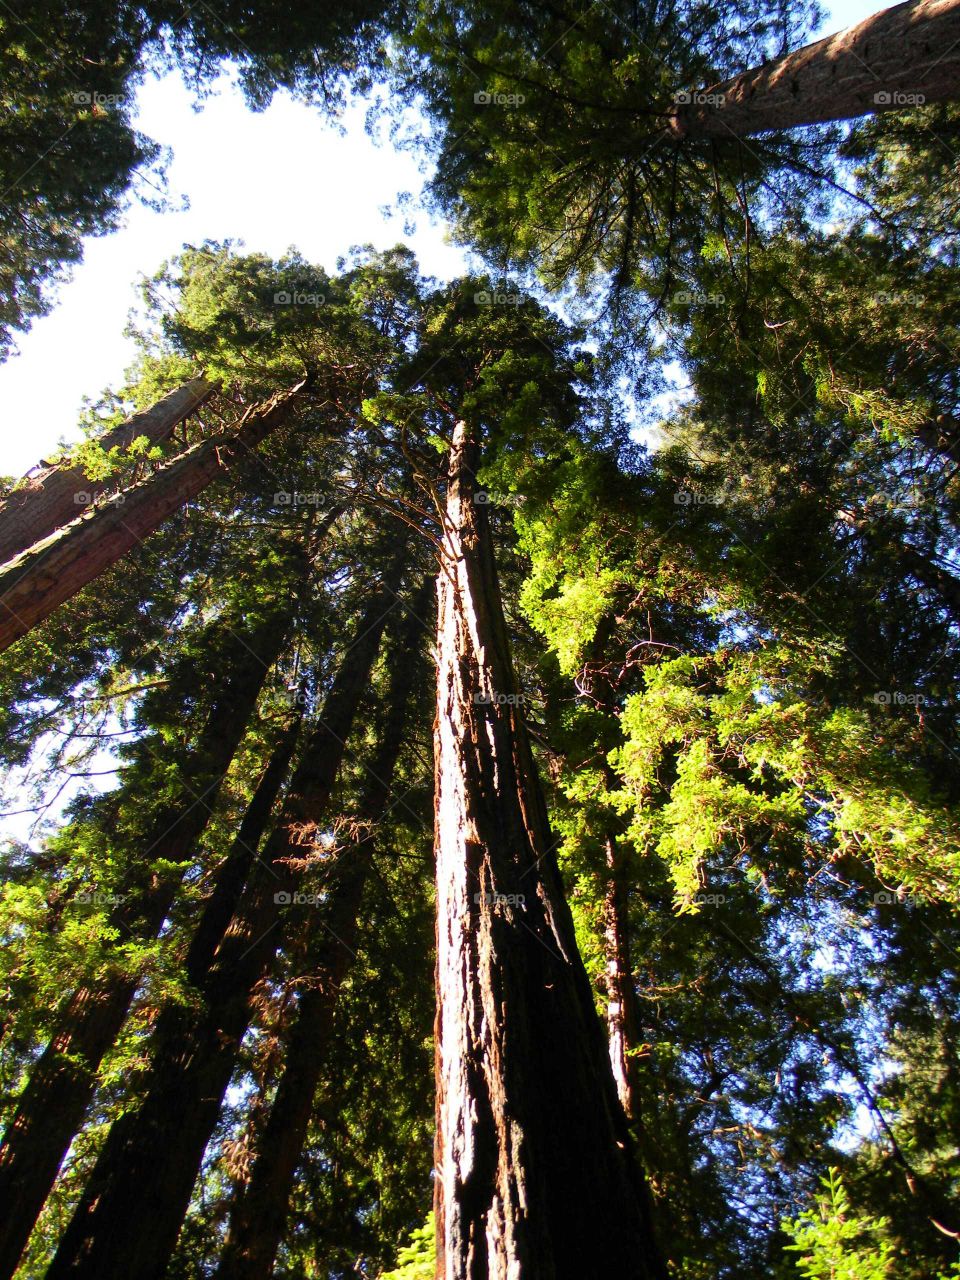 The Redwoods